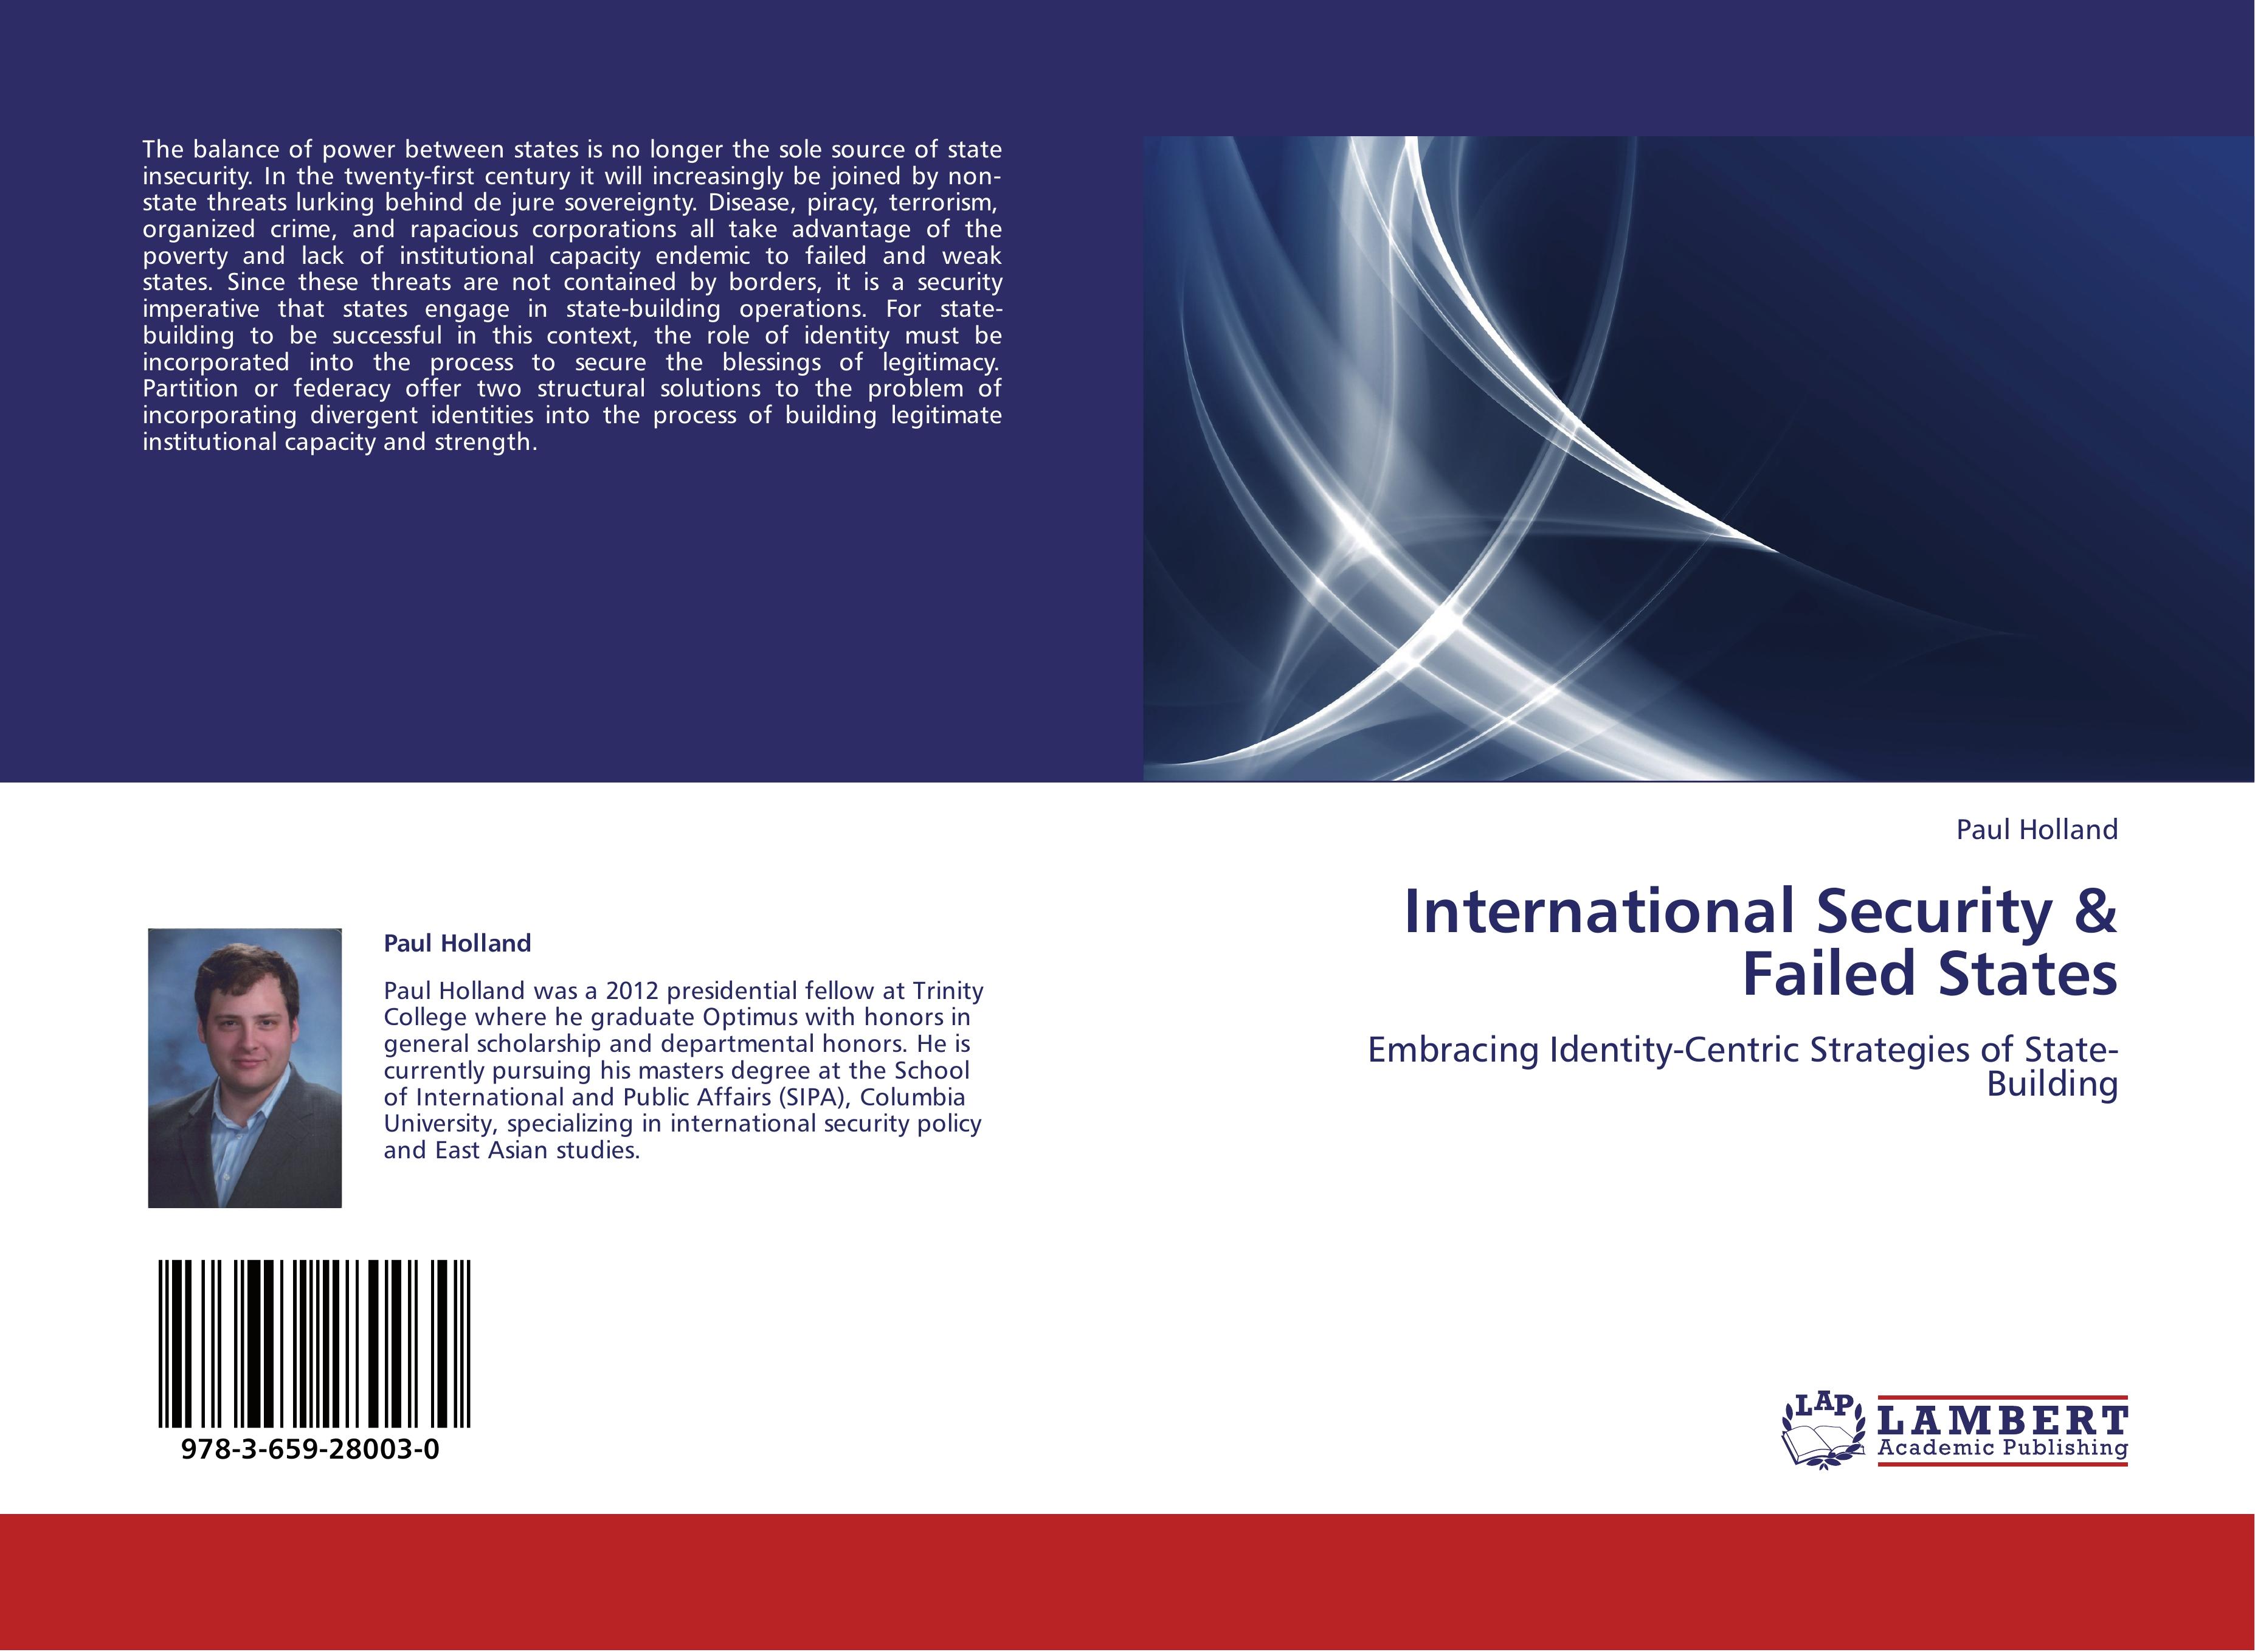 International Security & Failed States - Paul Holland